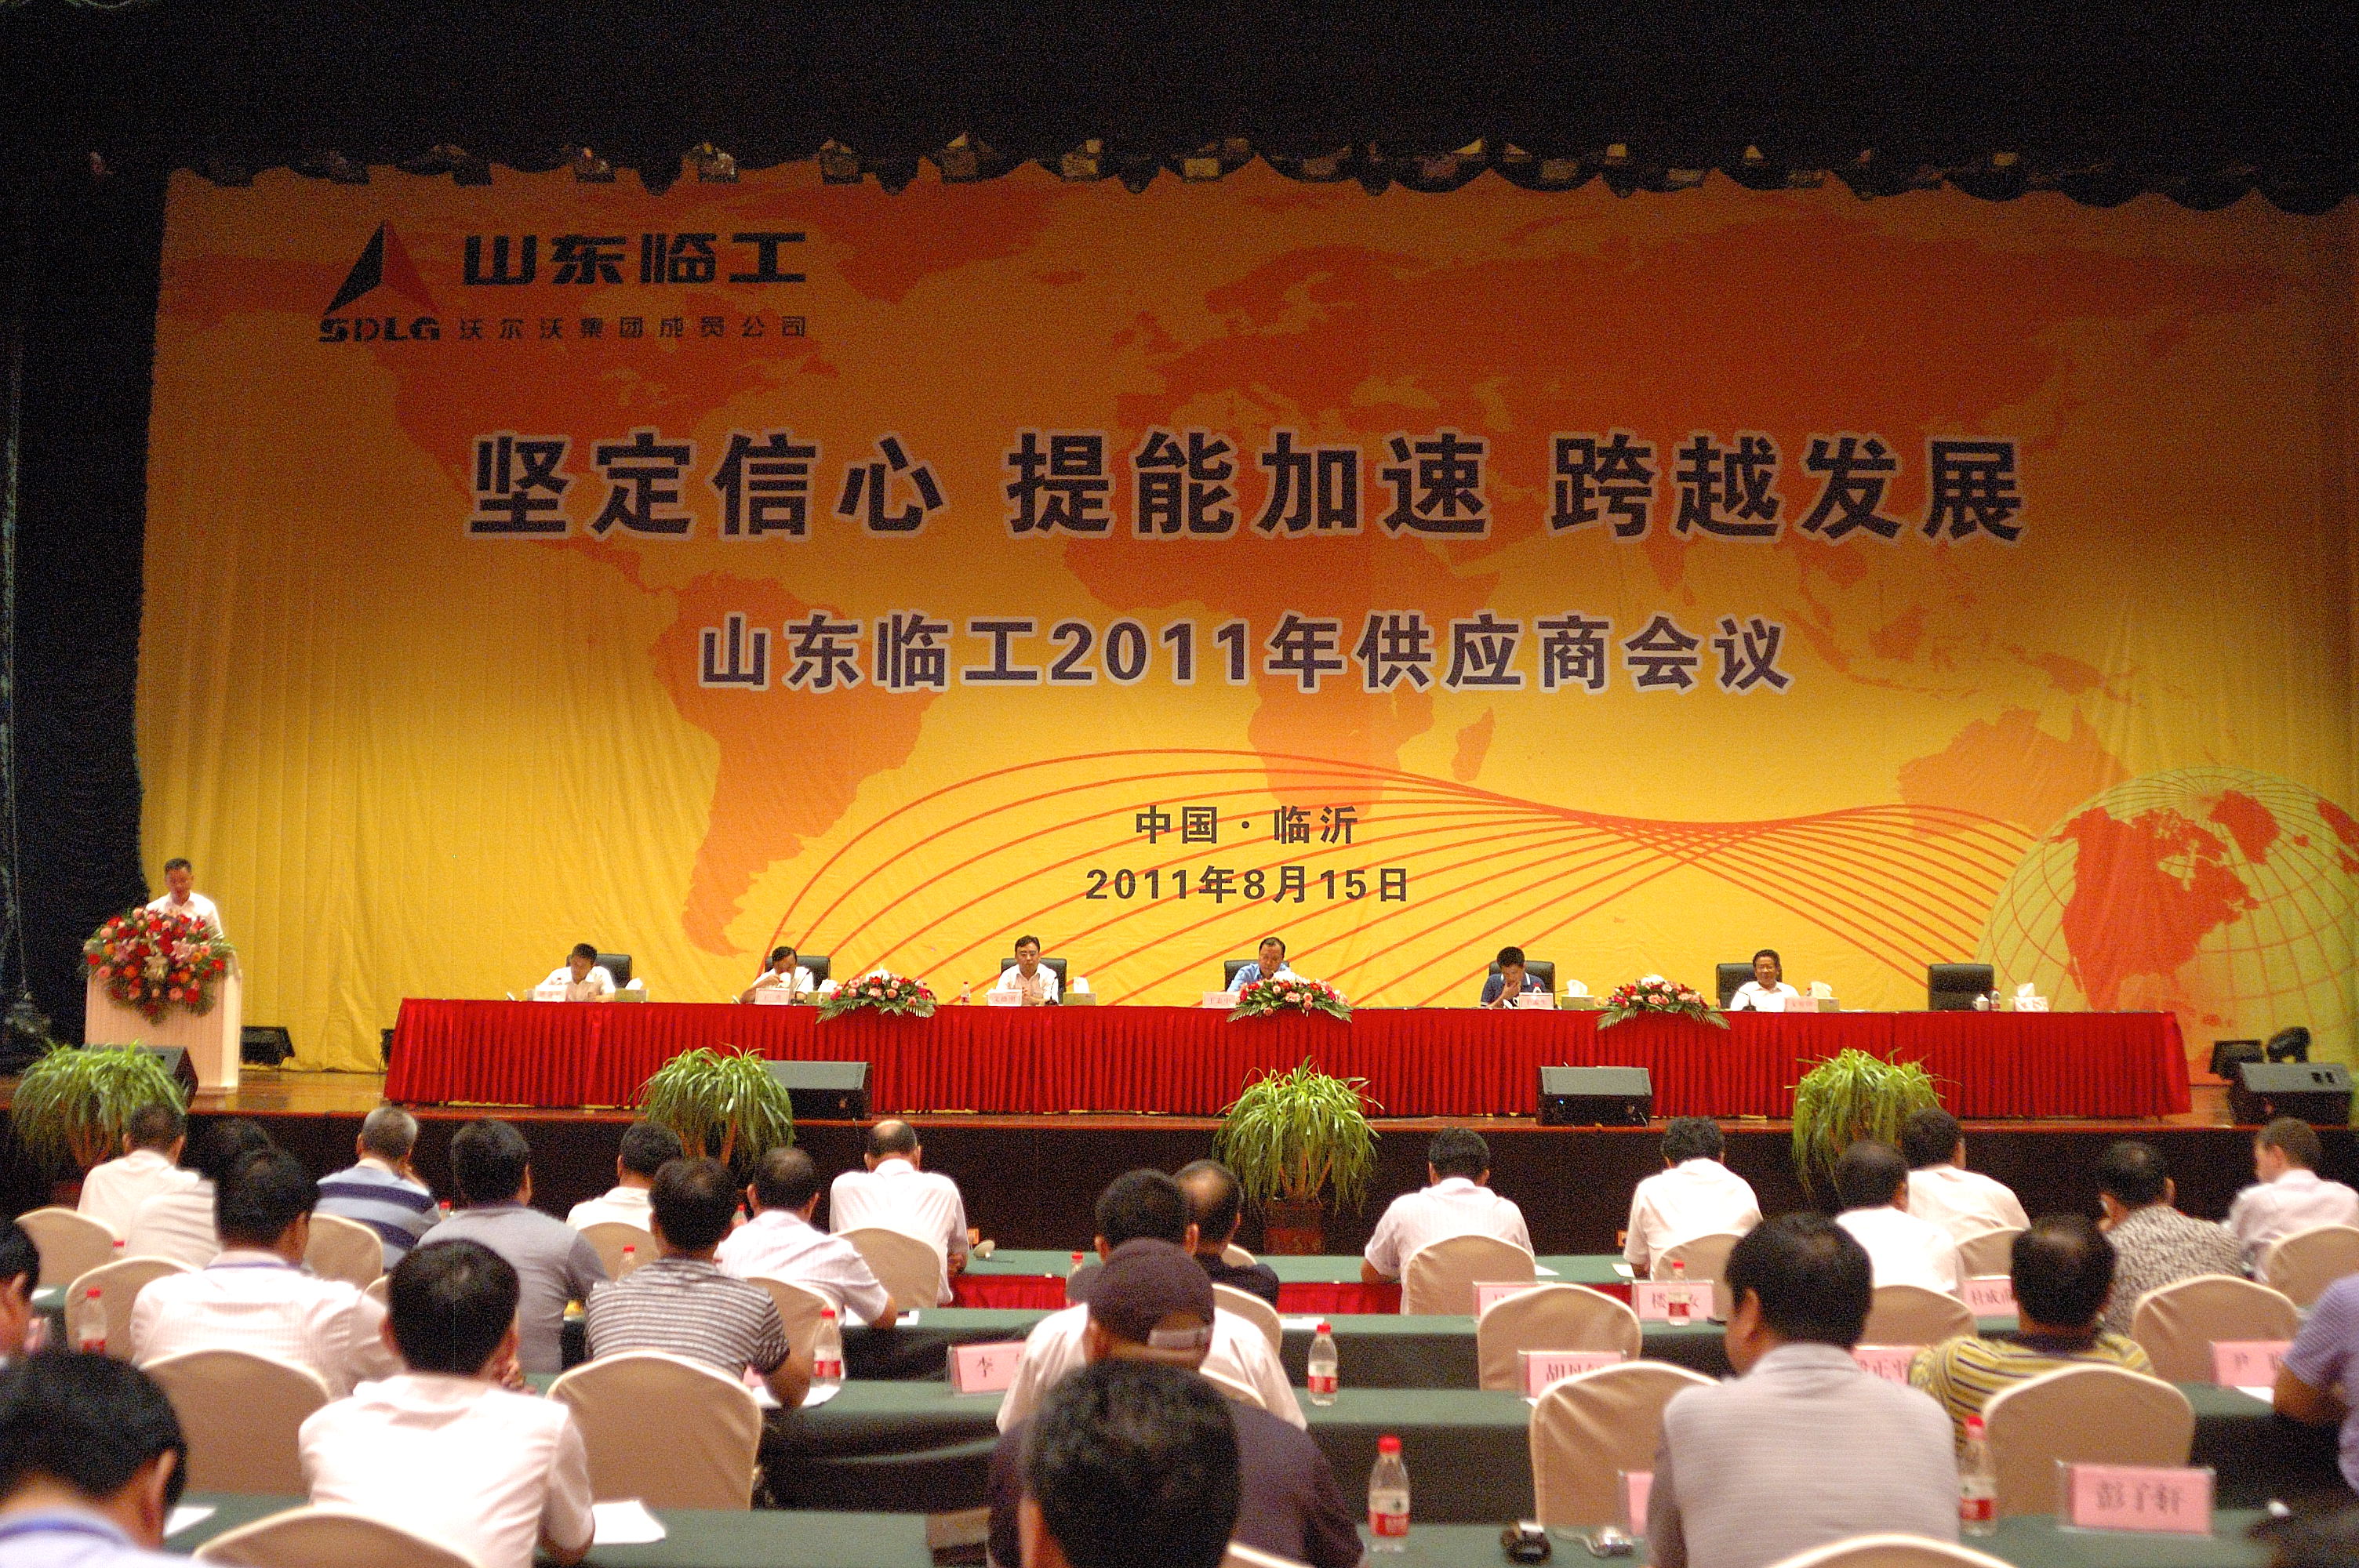 Lingong 2011 Supplier Meeting convened